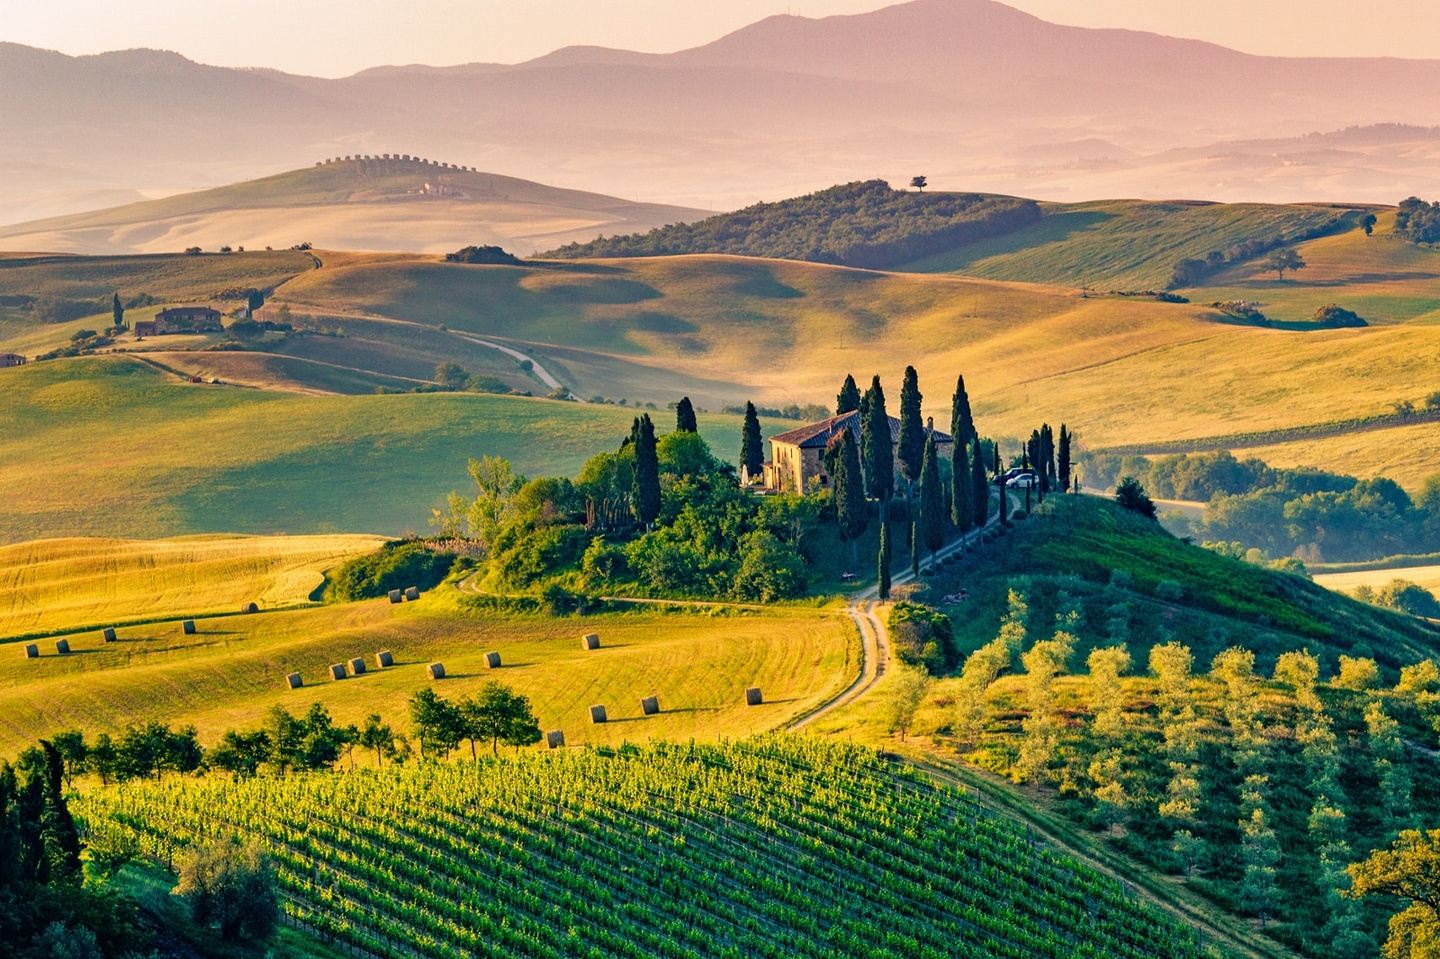 trips to tuscany 2023